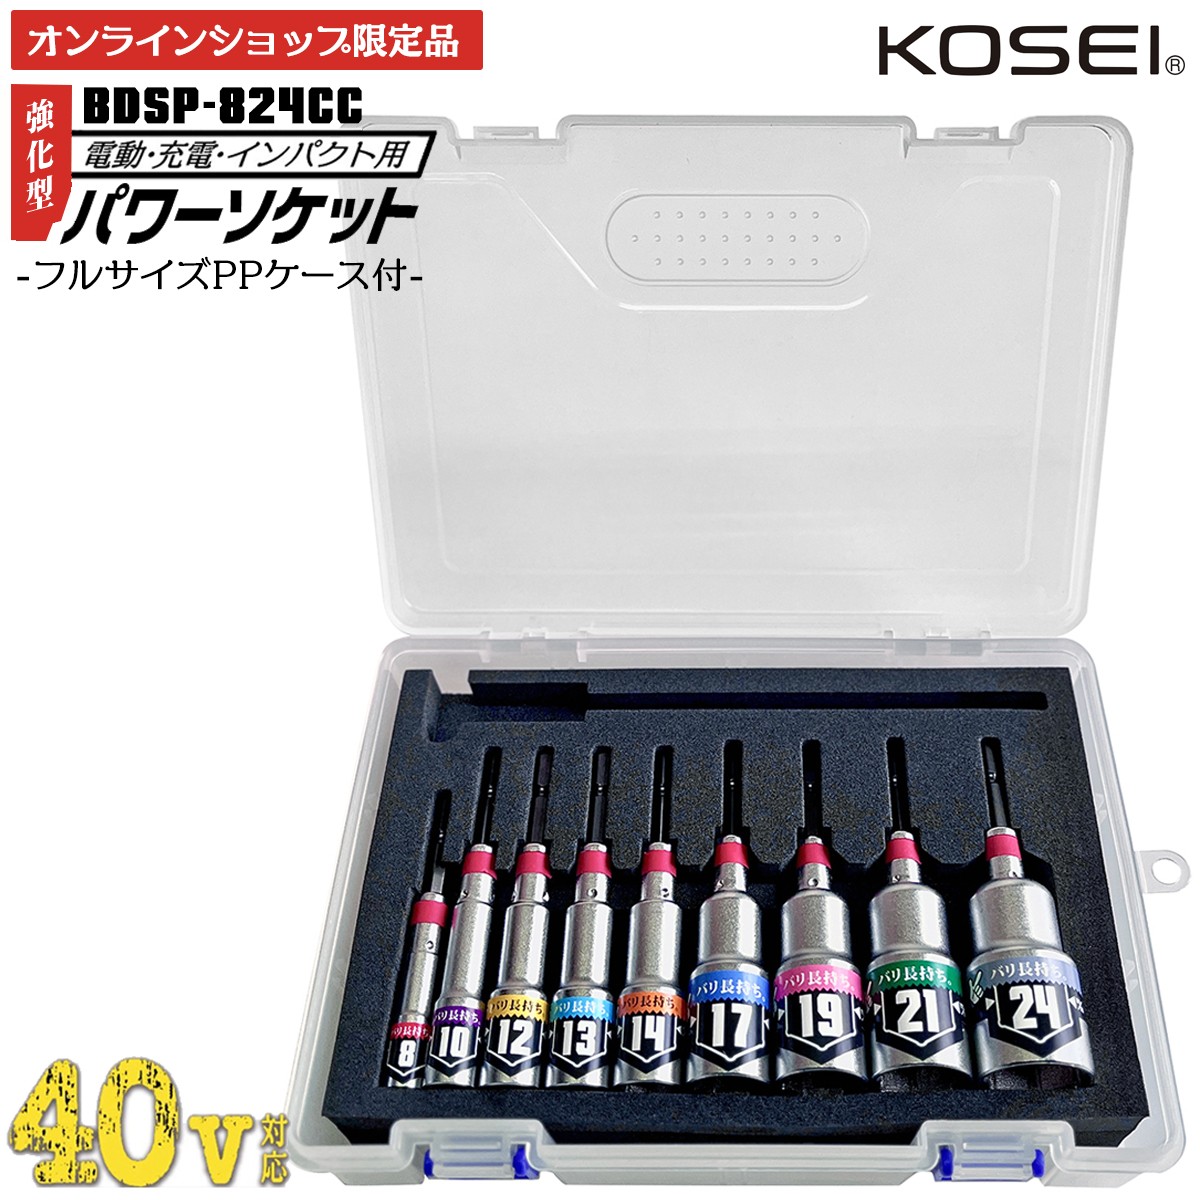 KOSEI [通販限定] 40V対応 強化型パワーソケット ケースセット 8~24mm 